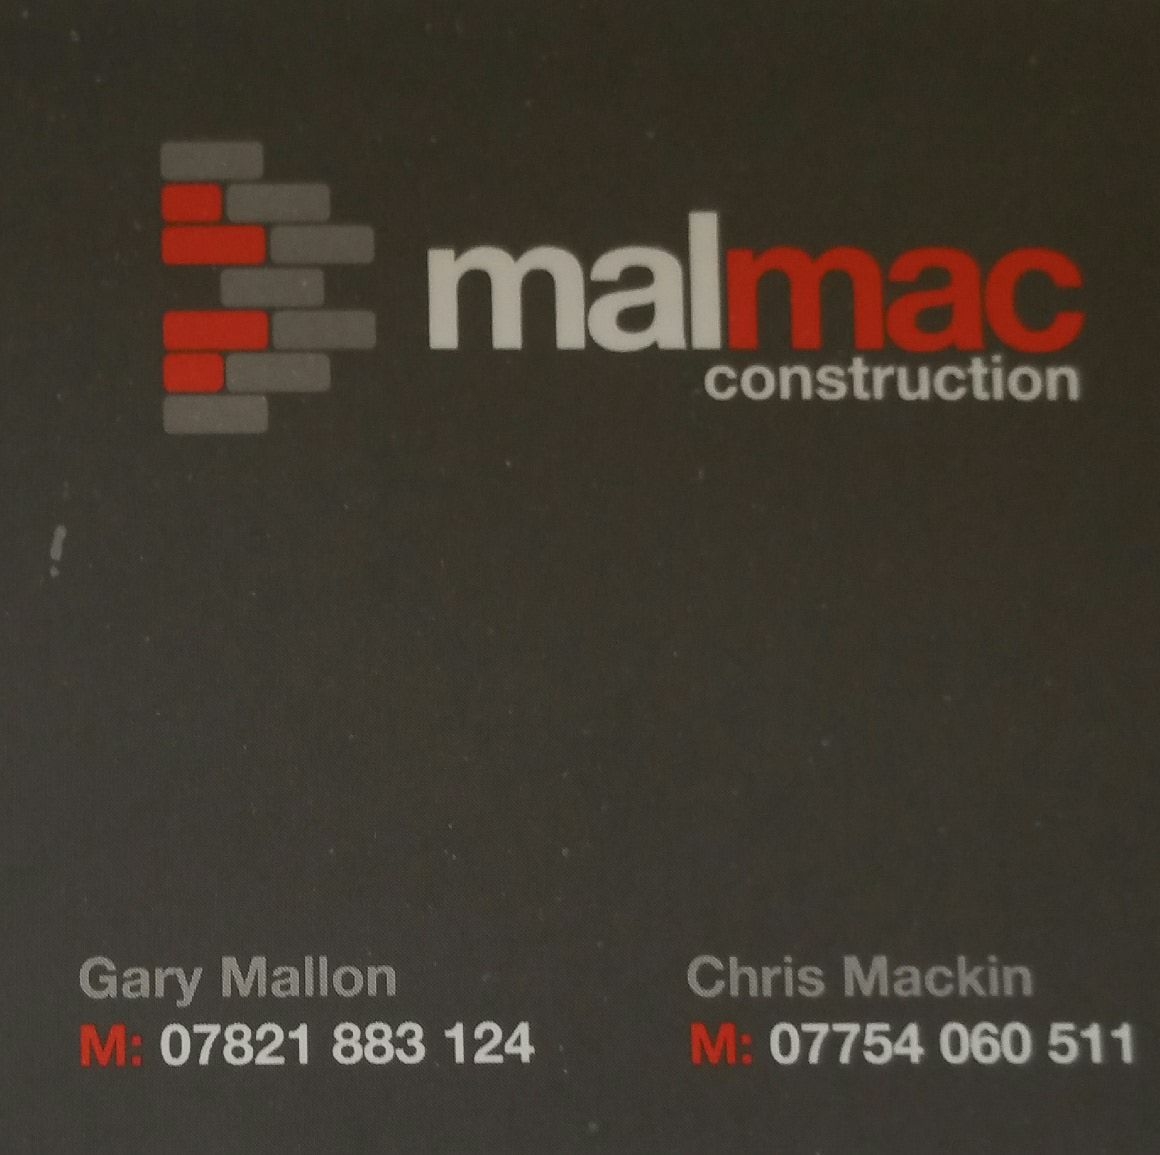 Malmac Construction